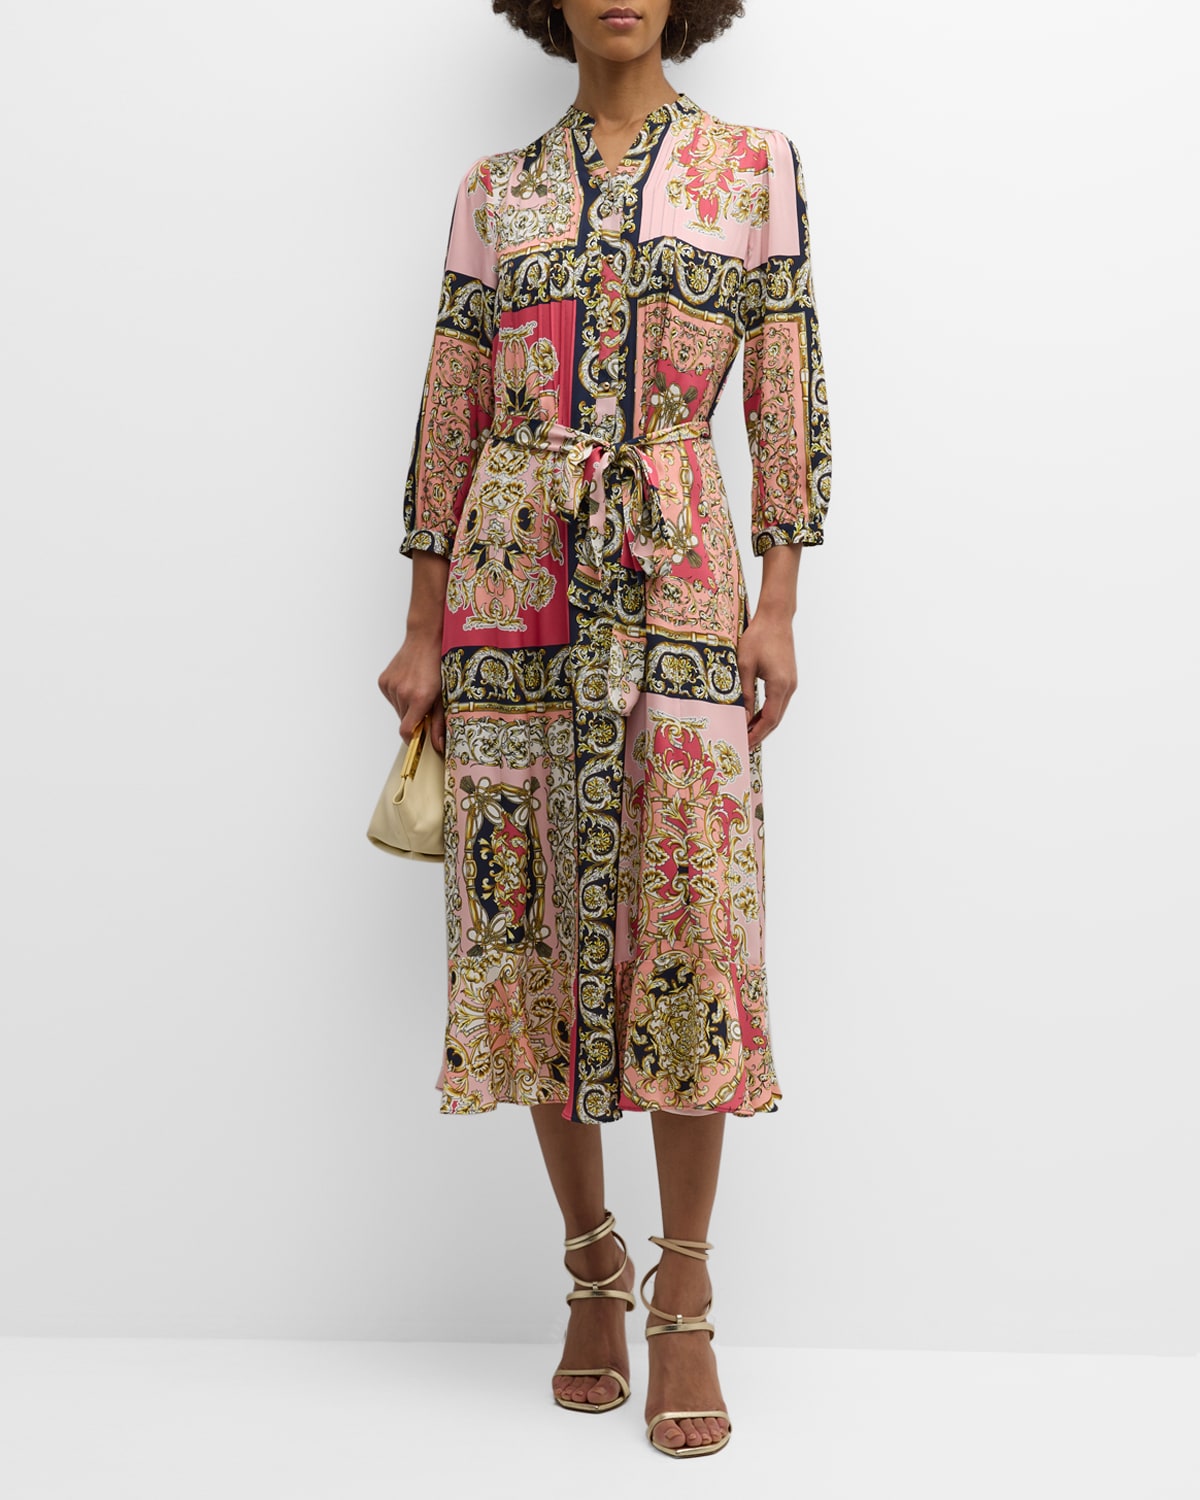 The Mila Pintuck Floral-Print Midi Dress